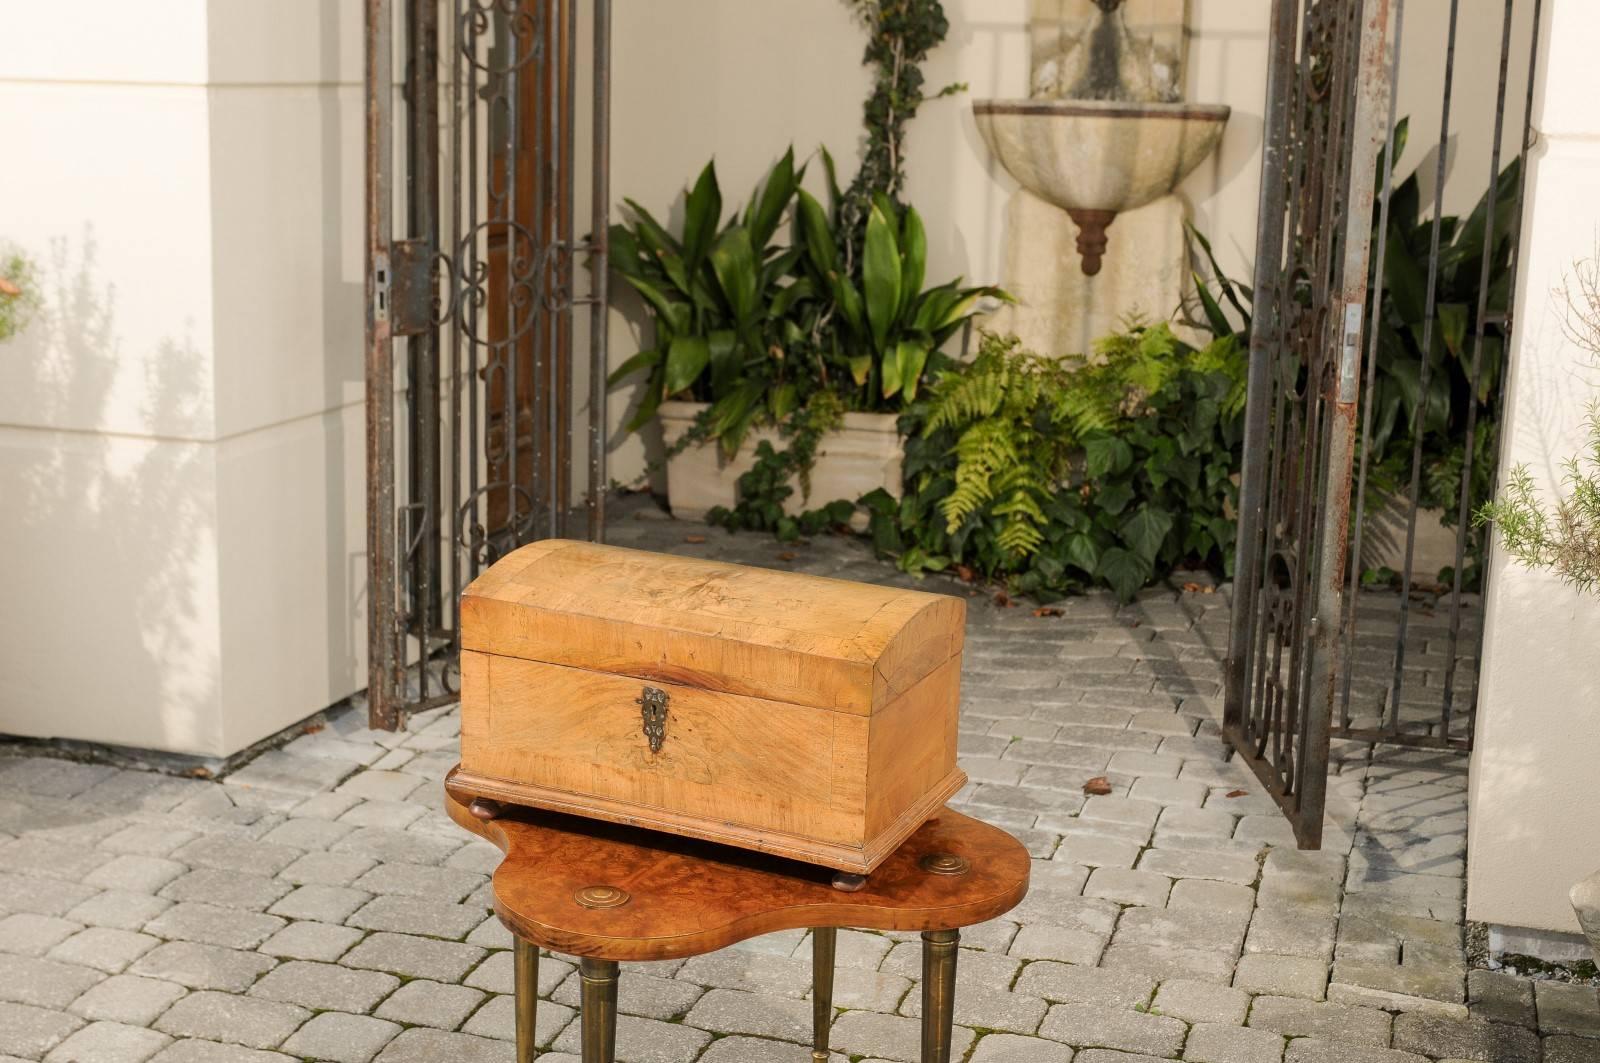 Veneer 1815 Biedermeier Austrian Decorative Box with Arched Lid and Burled Walnut